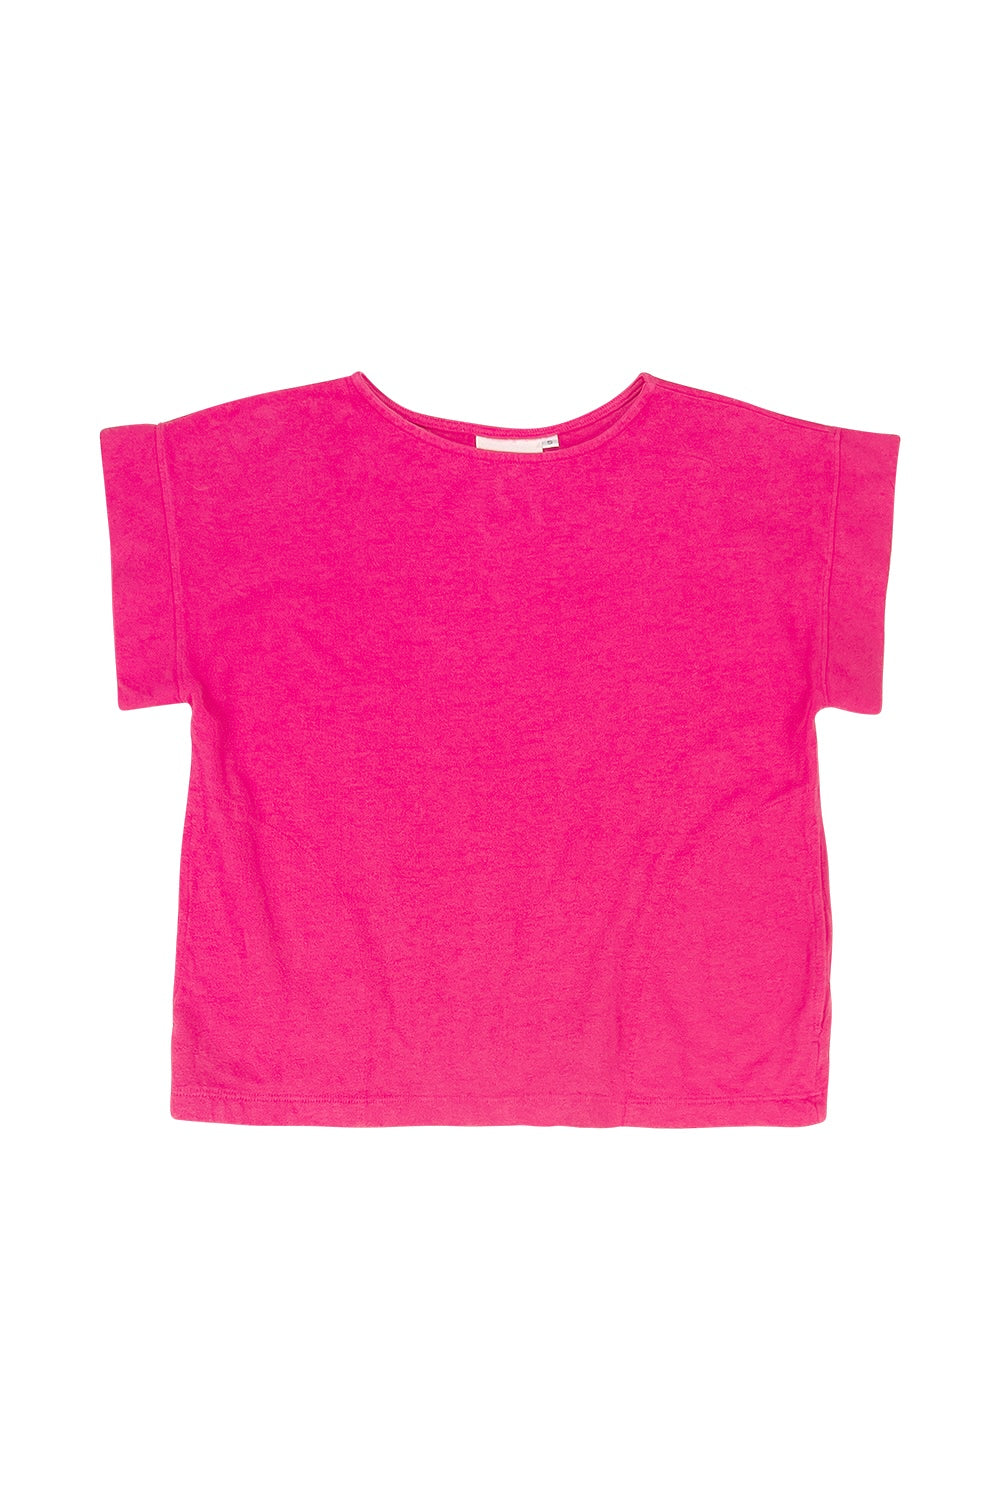 Taos Top | Jungmaven Hemp Clothing & Accessories / Color: Pink Grapefruit